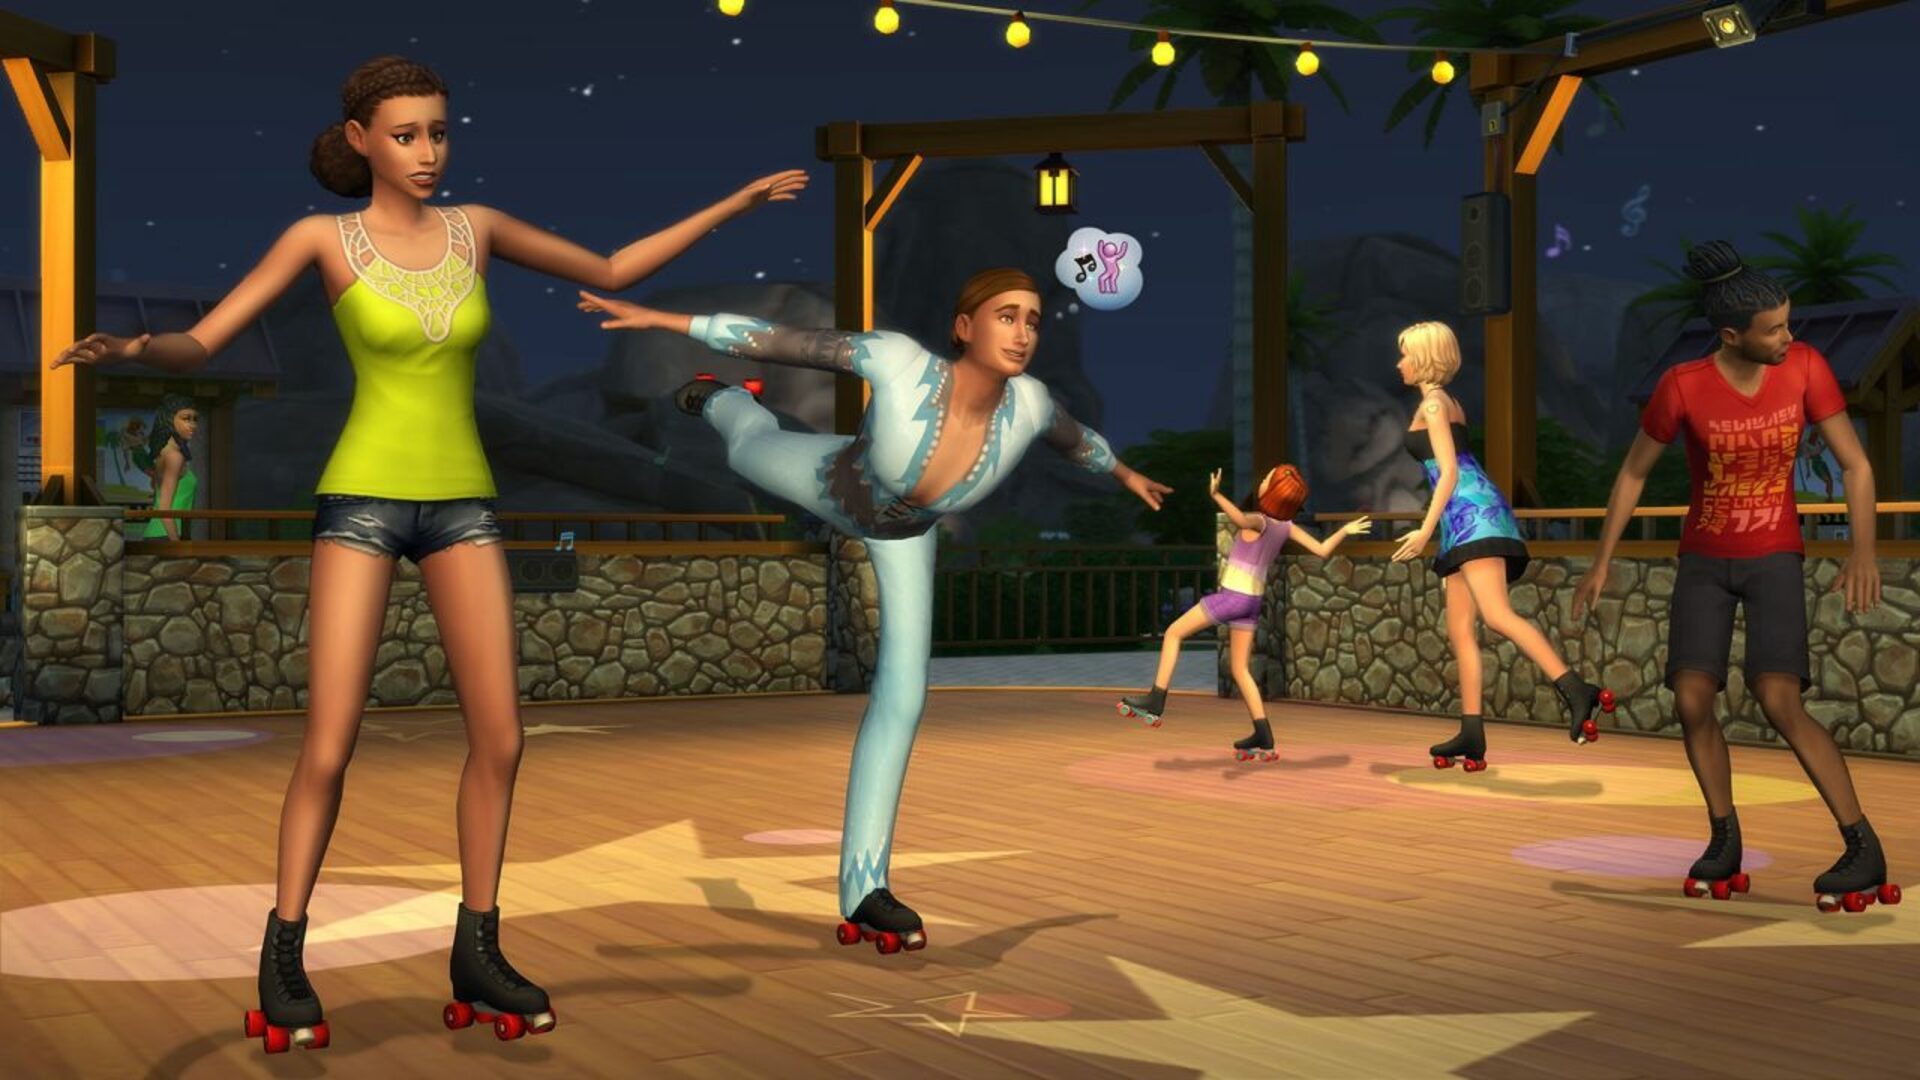 The Sims 4 - Seasons DLC Origin CD Key (Chaves de jogos) for free!